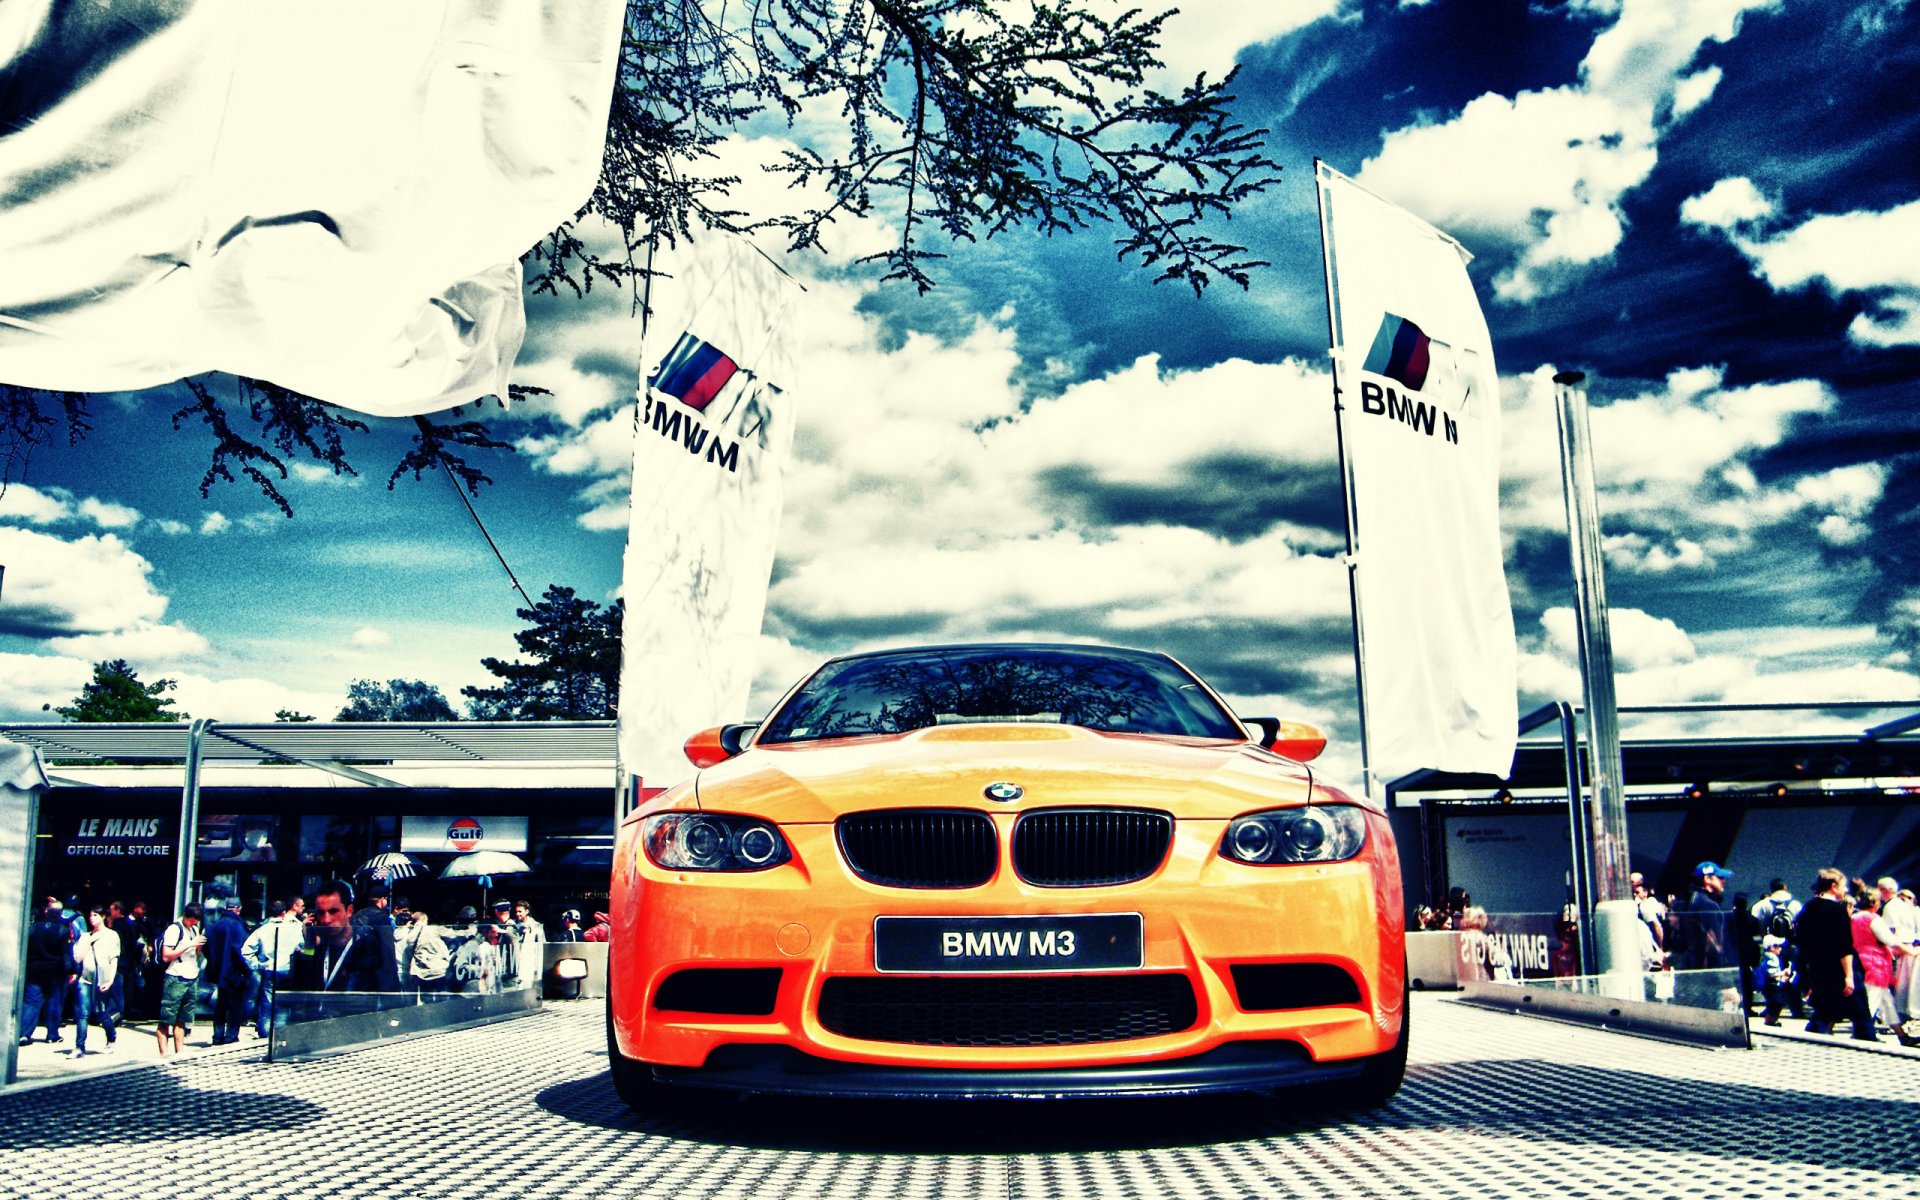 BMW m3 Leman